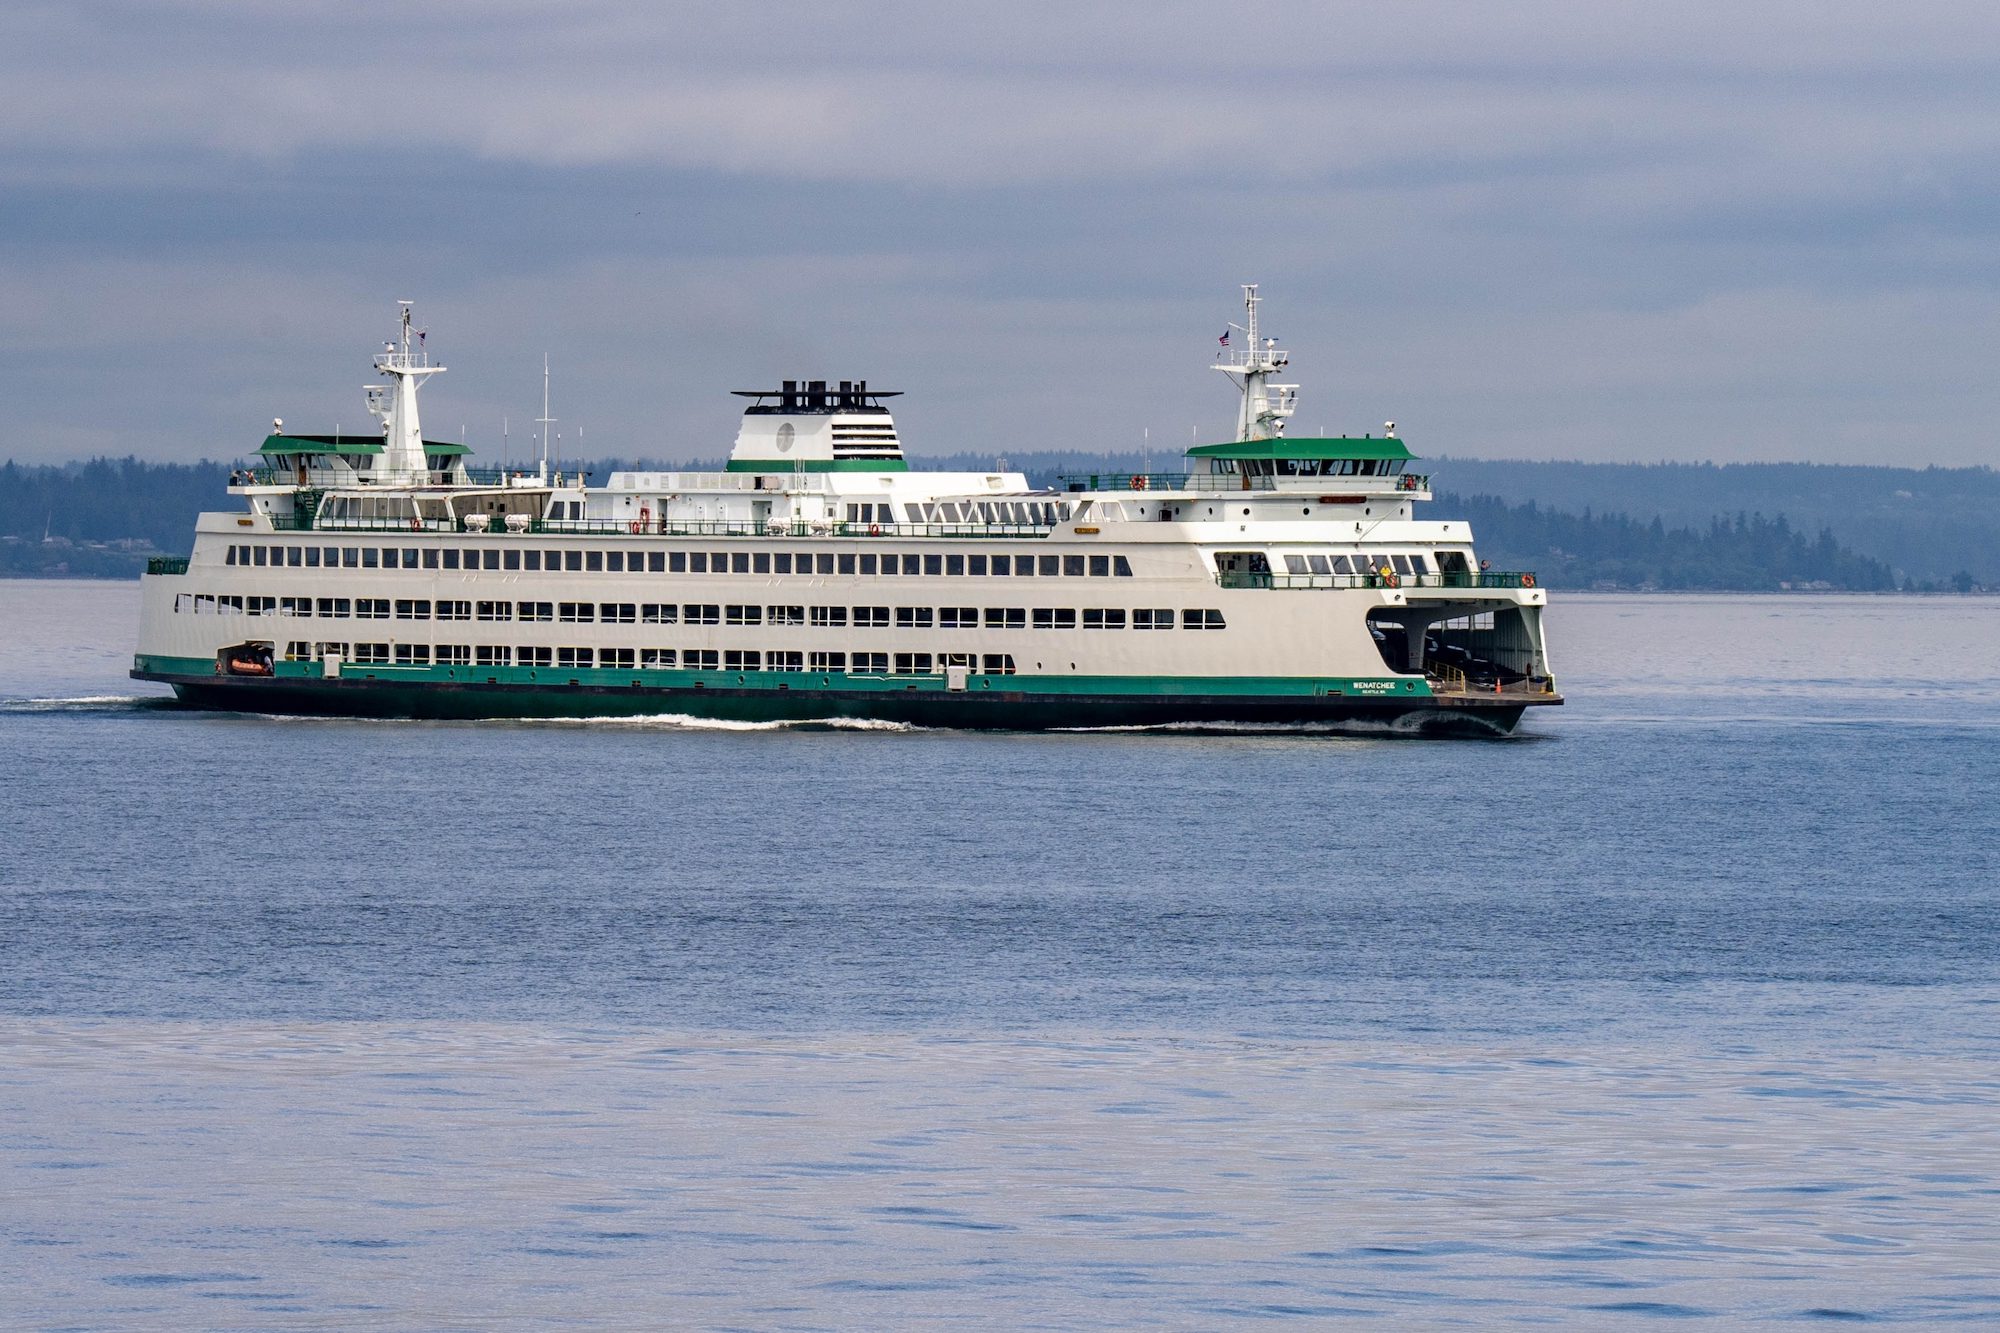 The Washington State Ferry Wenatchee